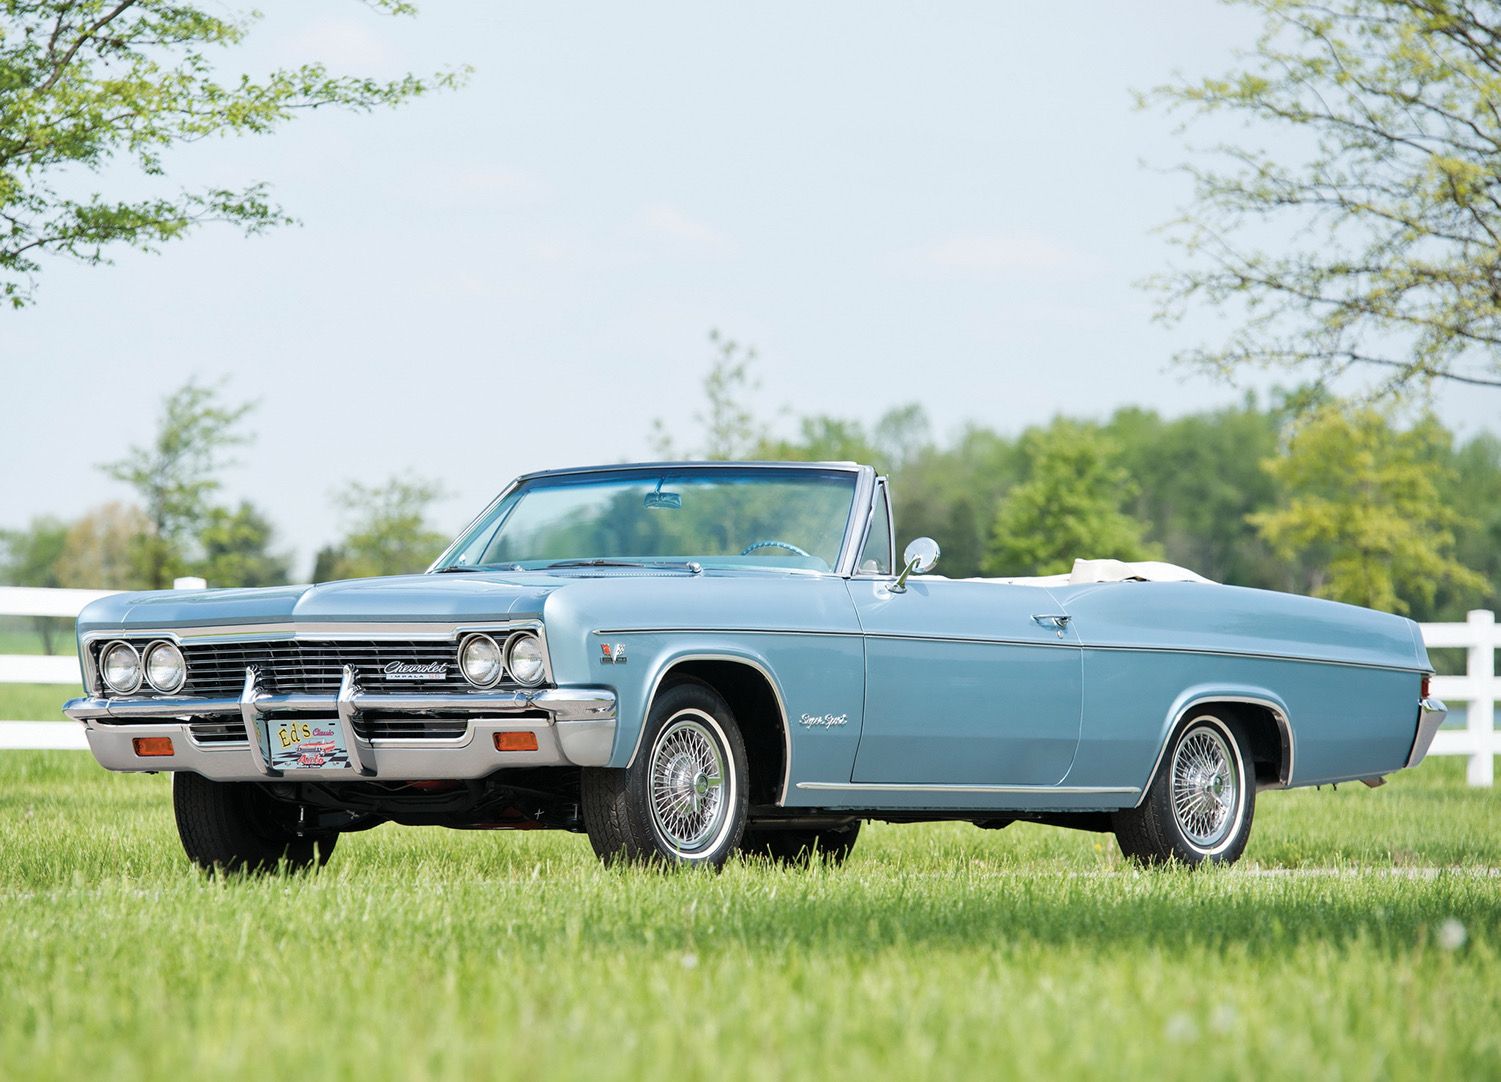 Chevrollet Impala in Light Blue